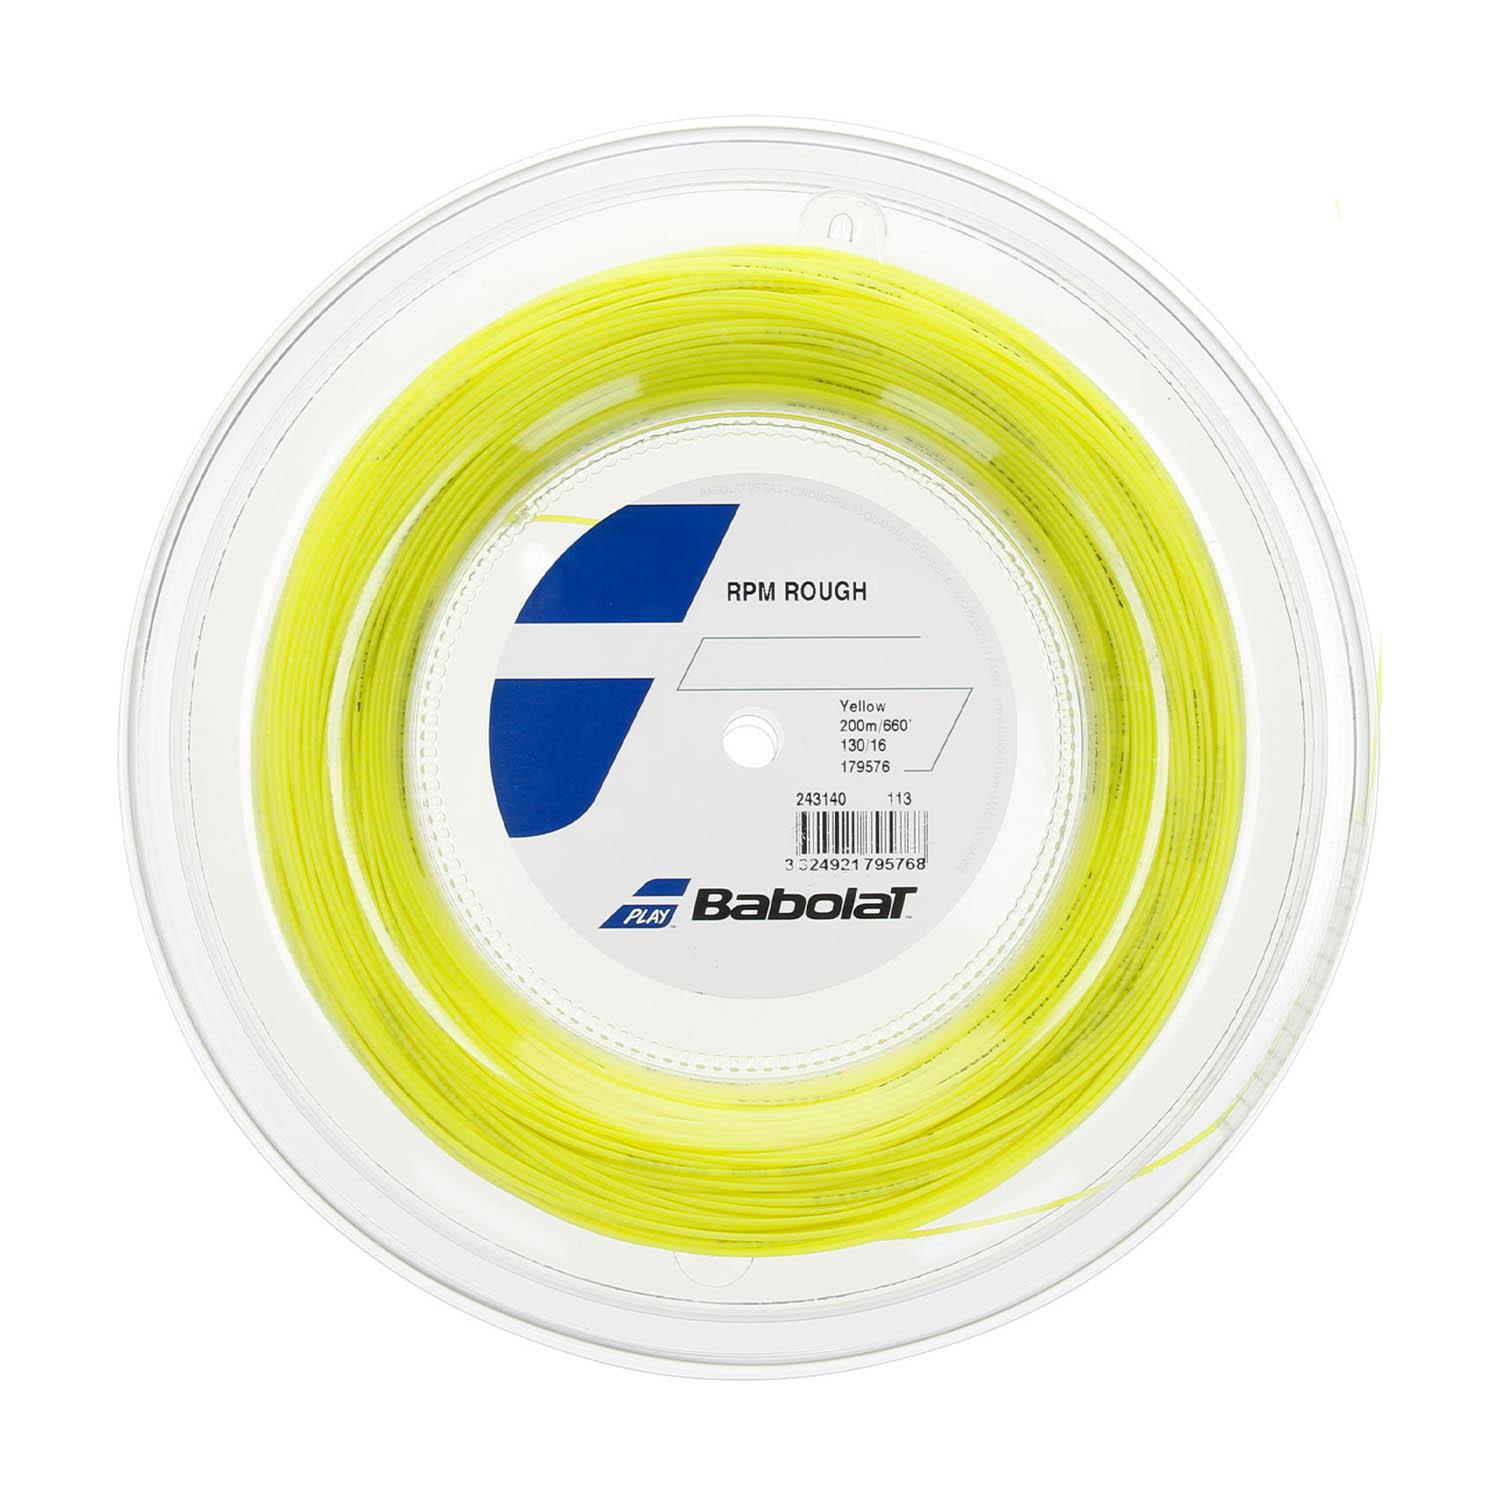 Babolat RPM Rough 1.30 200 m String Reel - Yellow